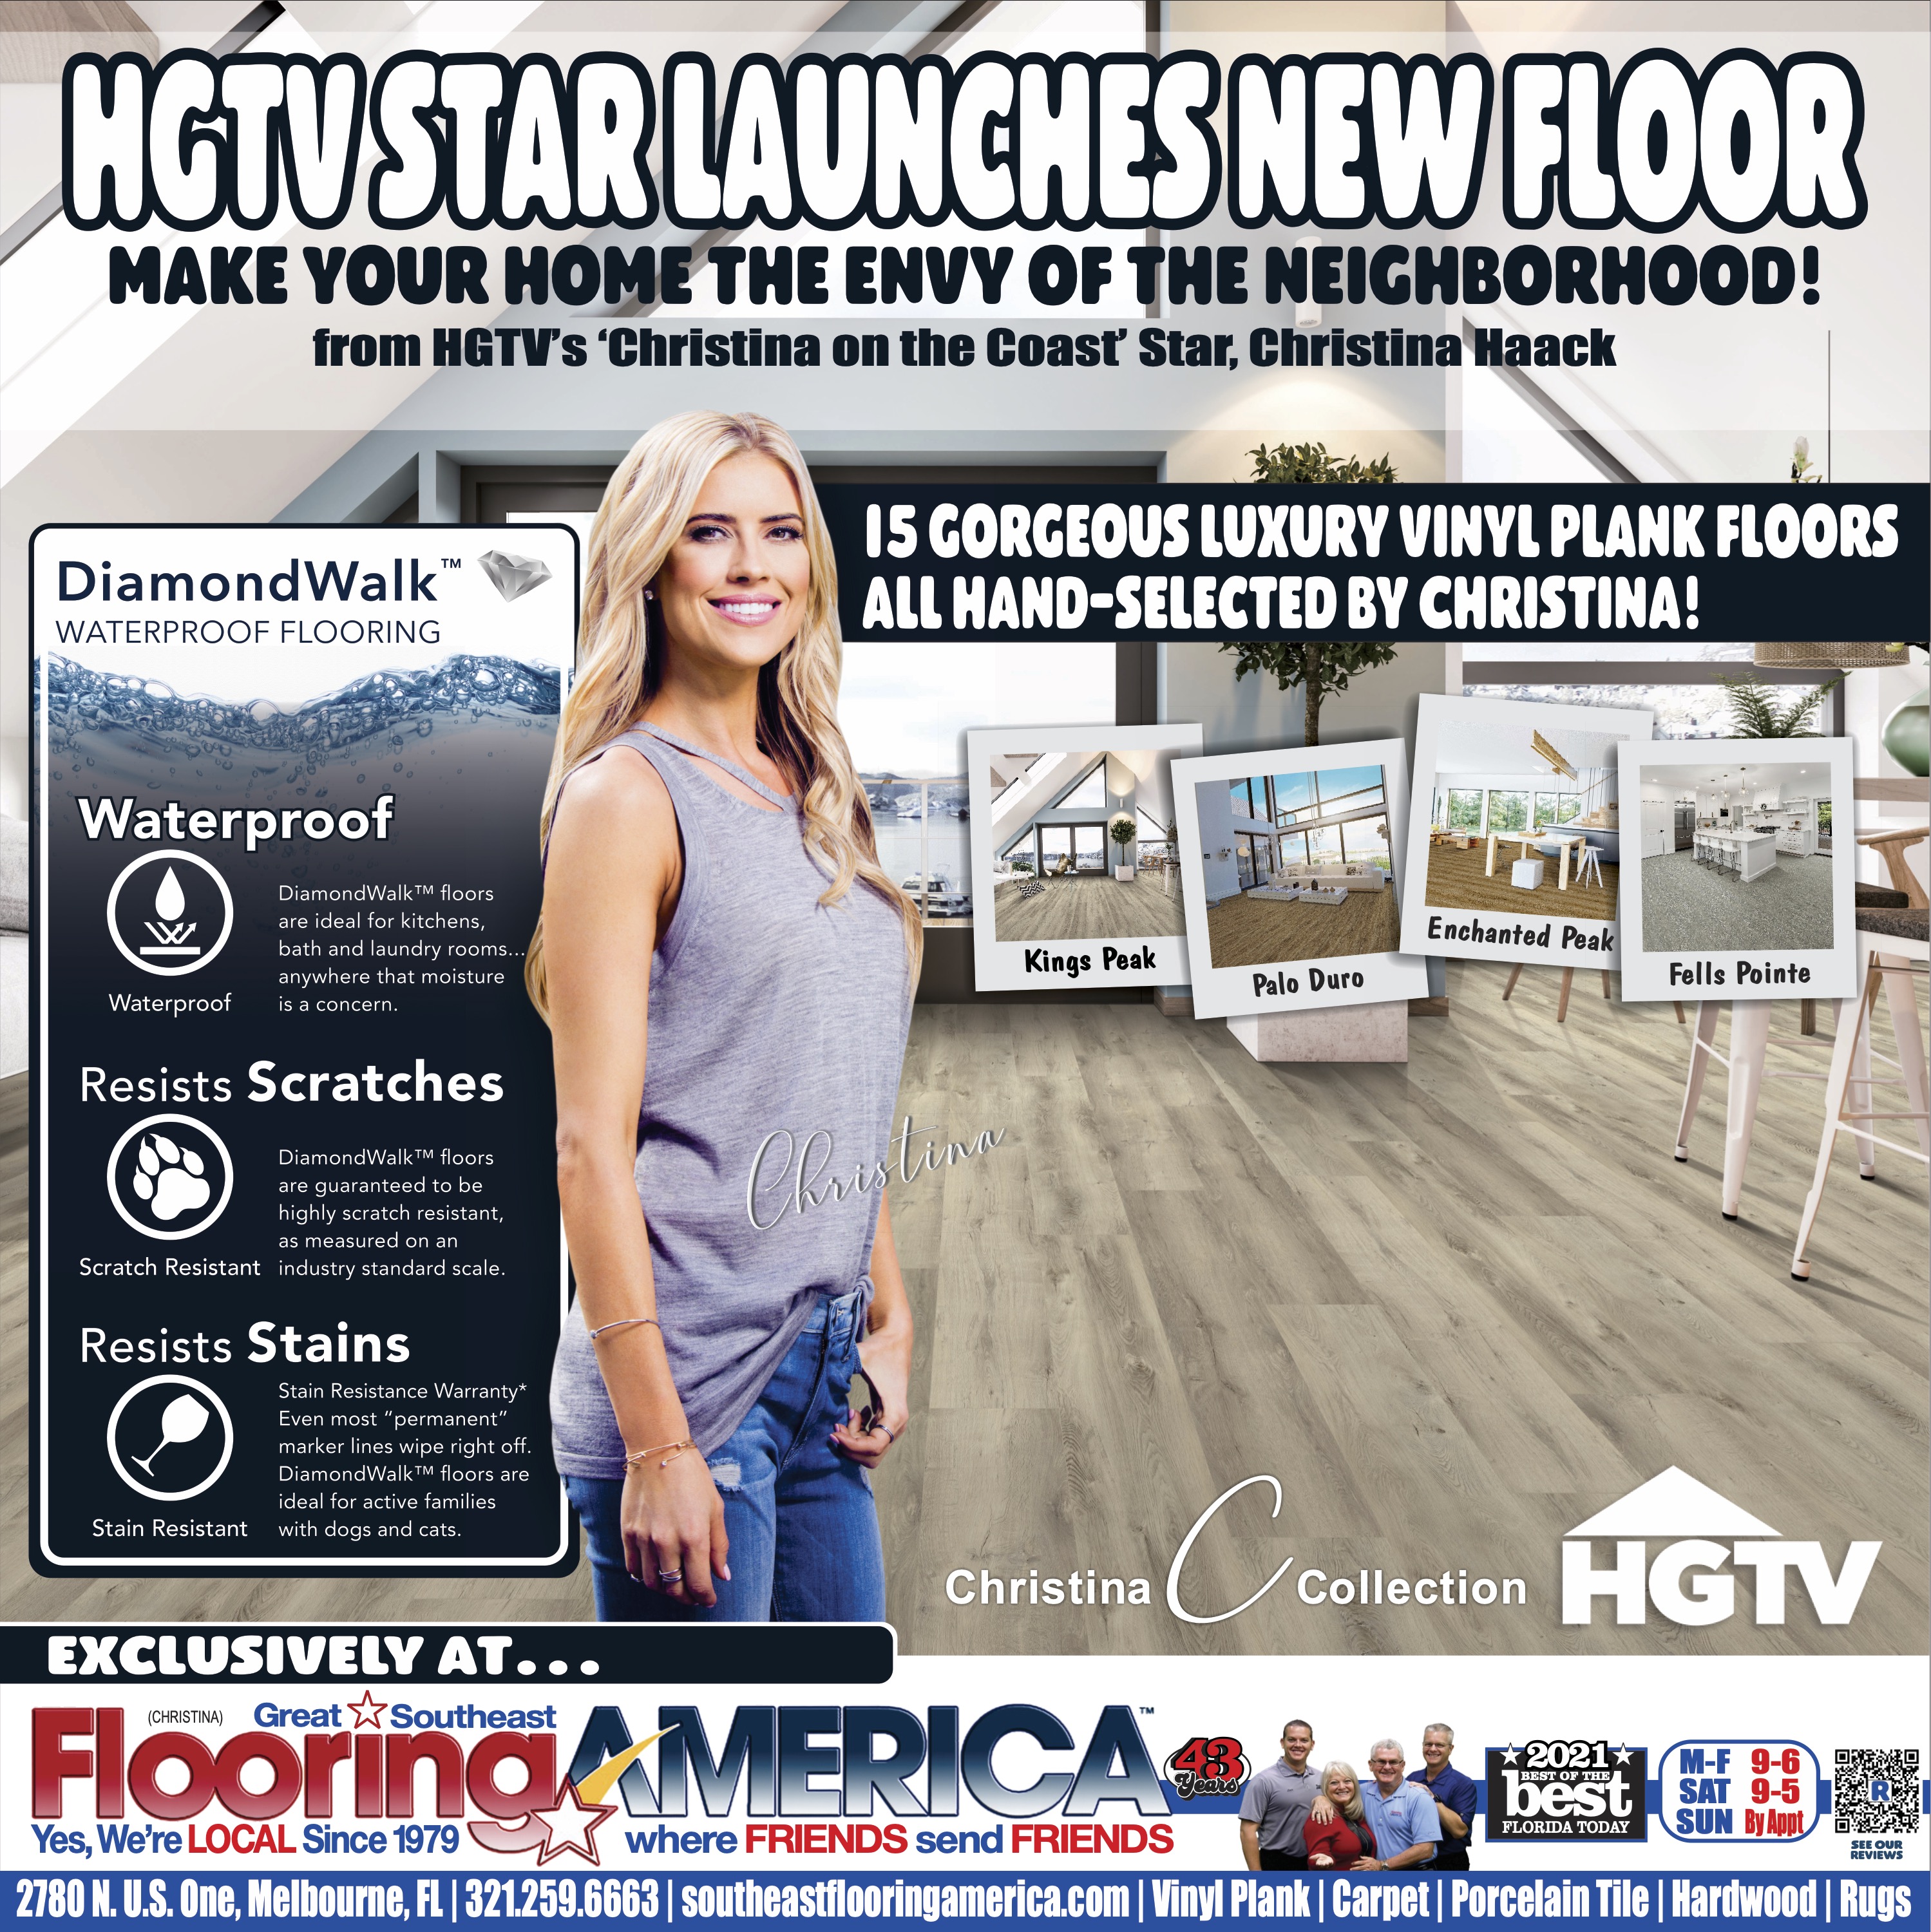 HGTV Star Launches New Floor